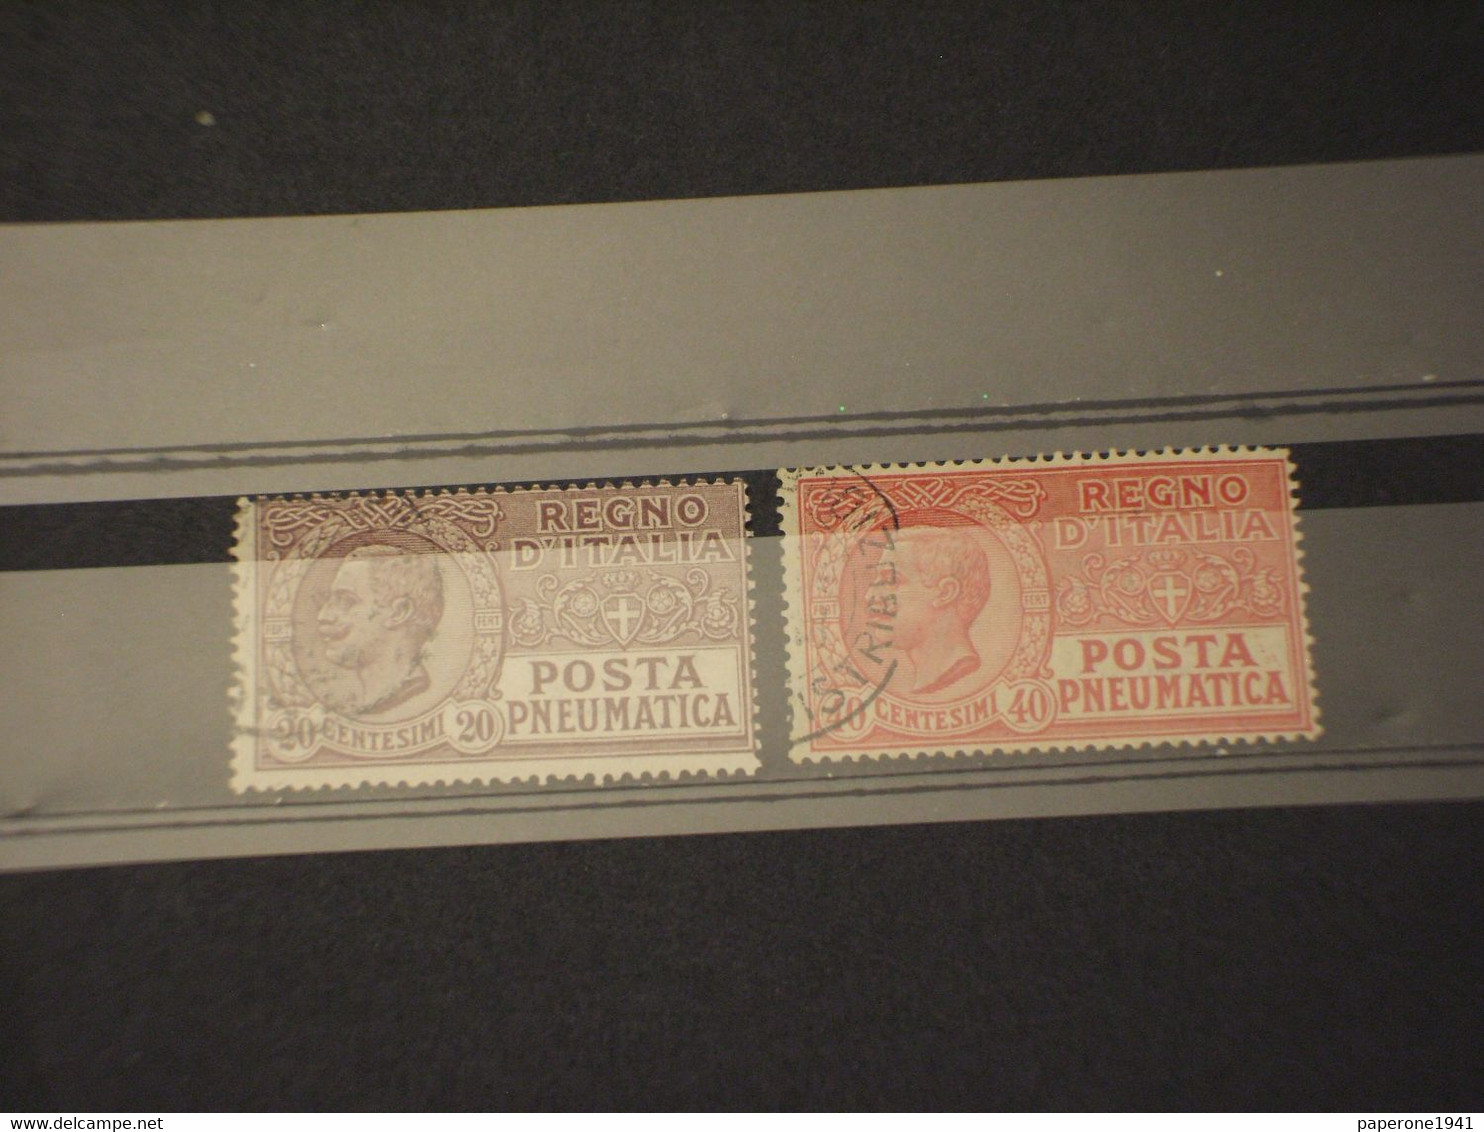 ITALIA REGNO-POSTA PNEUMATICA- 1925 RE 2 VALORI - TIMBRATI/USED - Pneumatic Mail